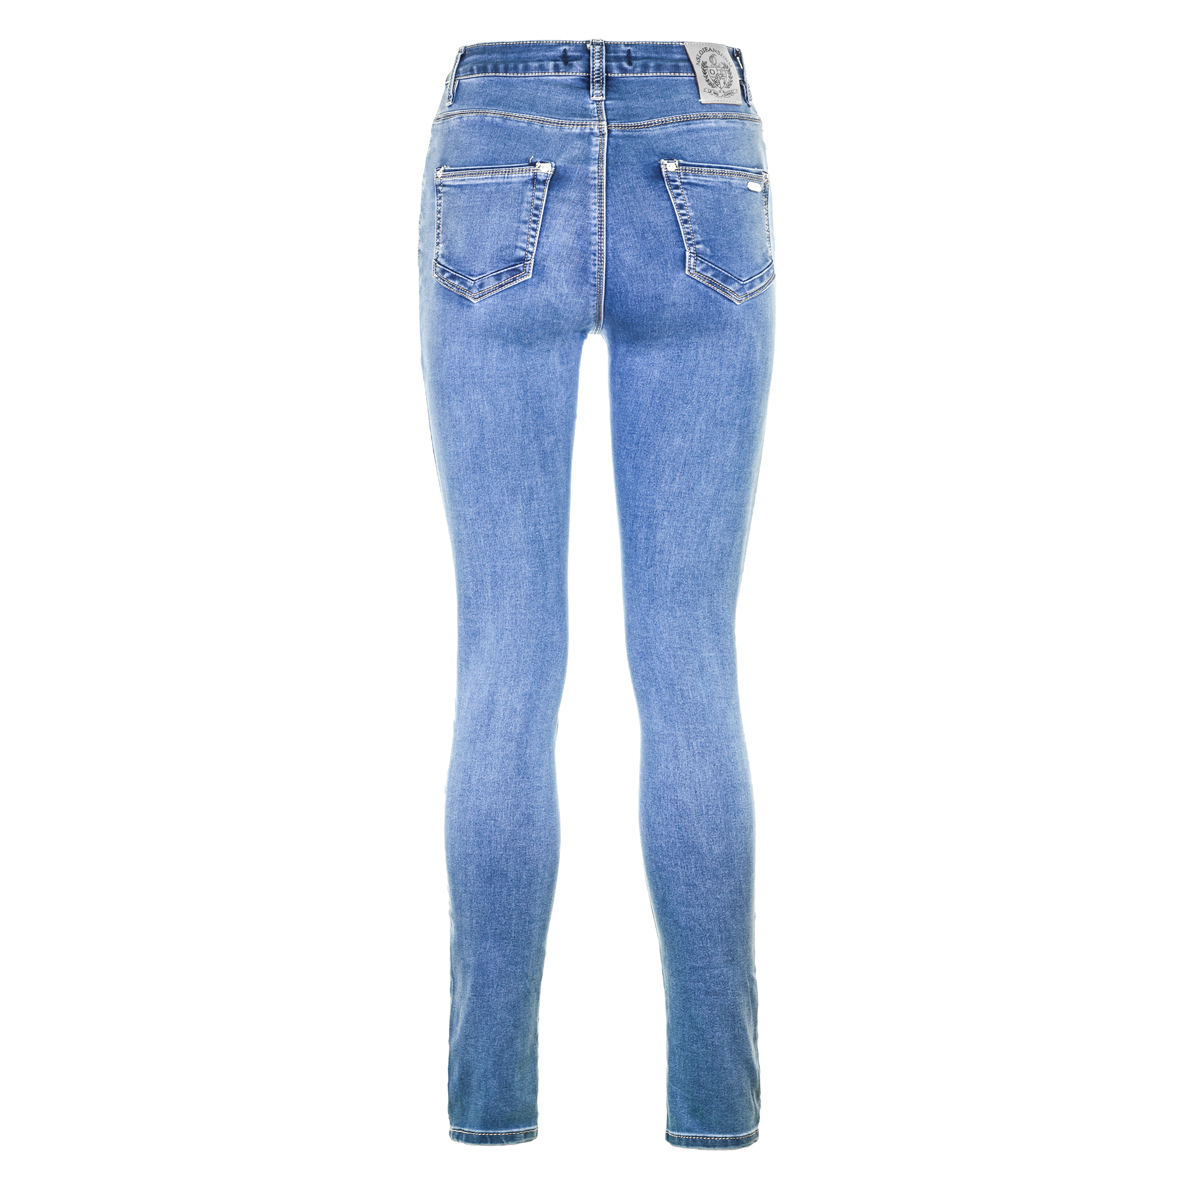 Жен. джинсы арт. 12-0086 Голубой р. 27 от Rastl